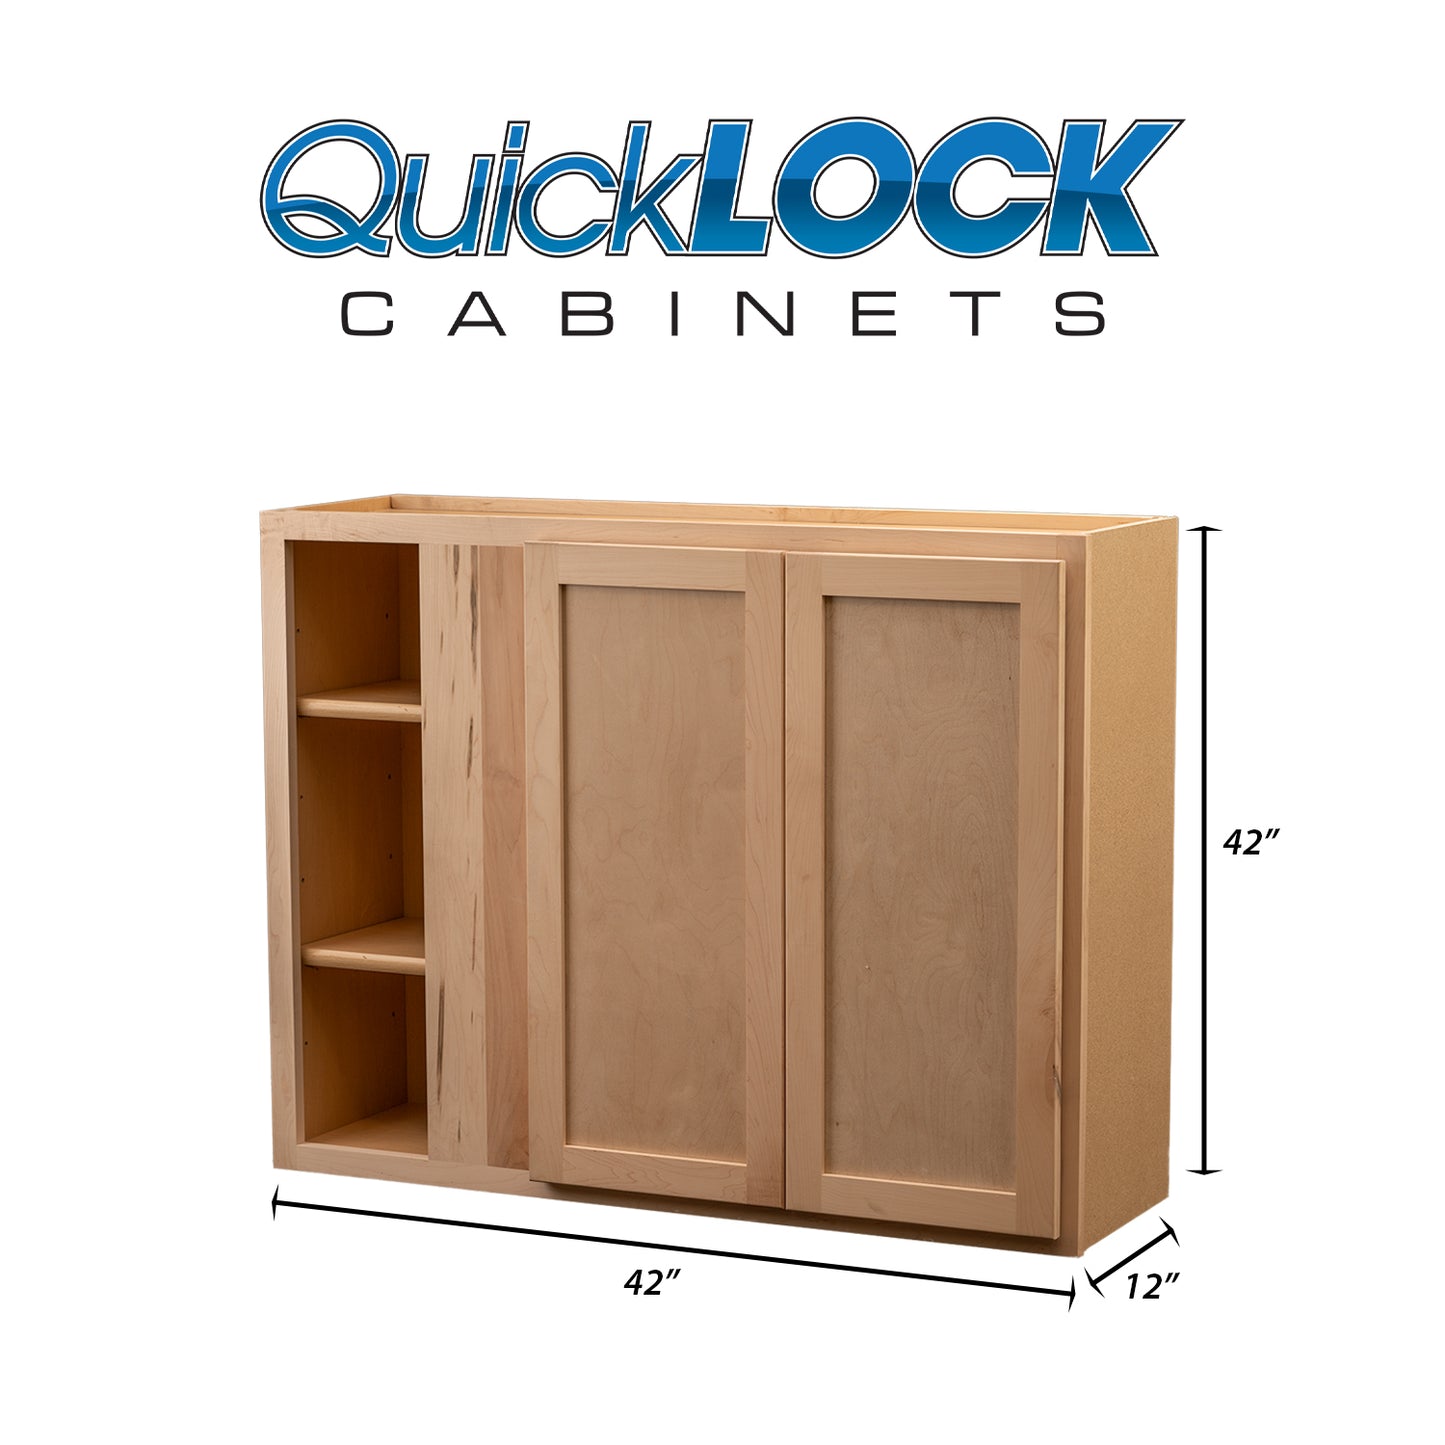 Quicklock RTA (Ready-to-Assemble) Raw Maple 42"Wx42"Hx12"D Blind Corner Wall Cabinet